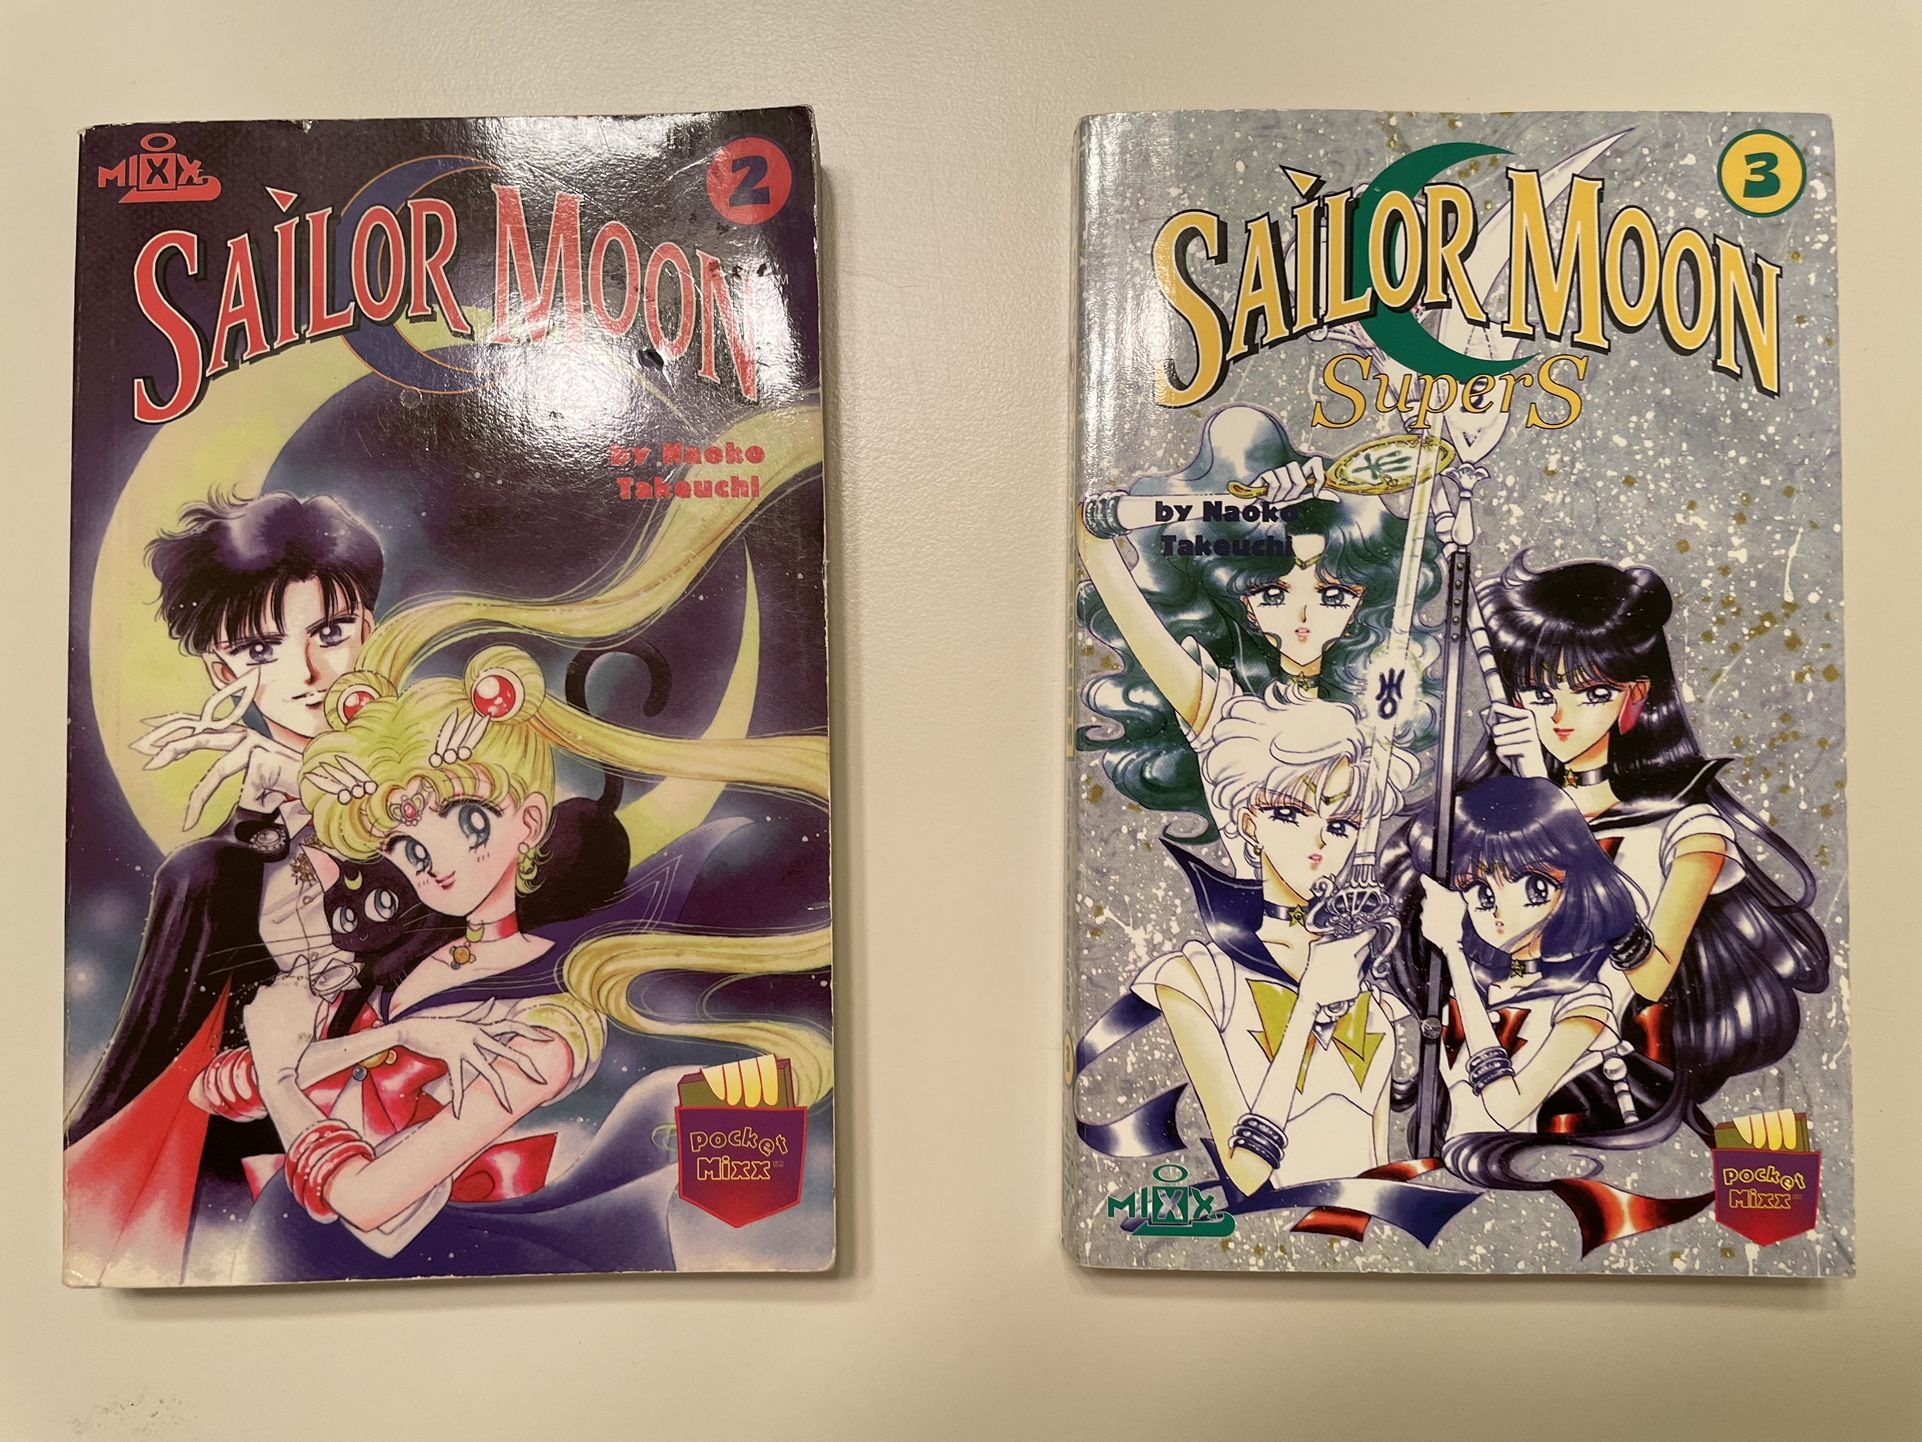 Vintage Sailor Moon Volume 2 Super S Vol 3